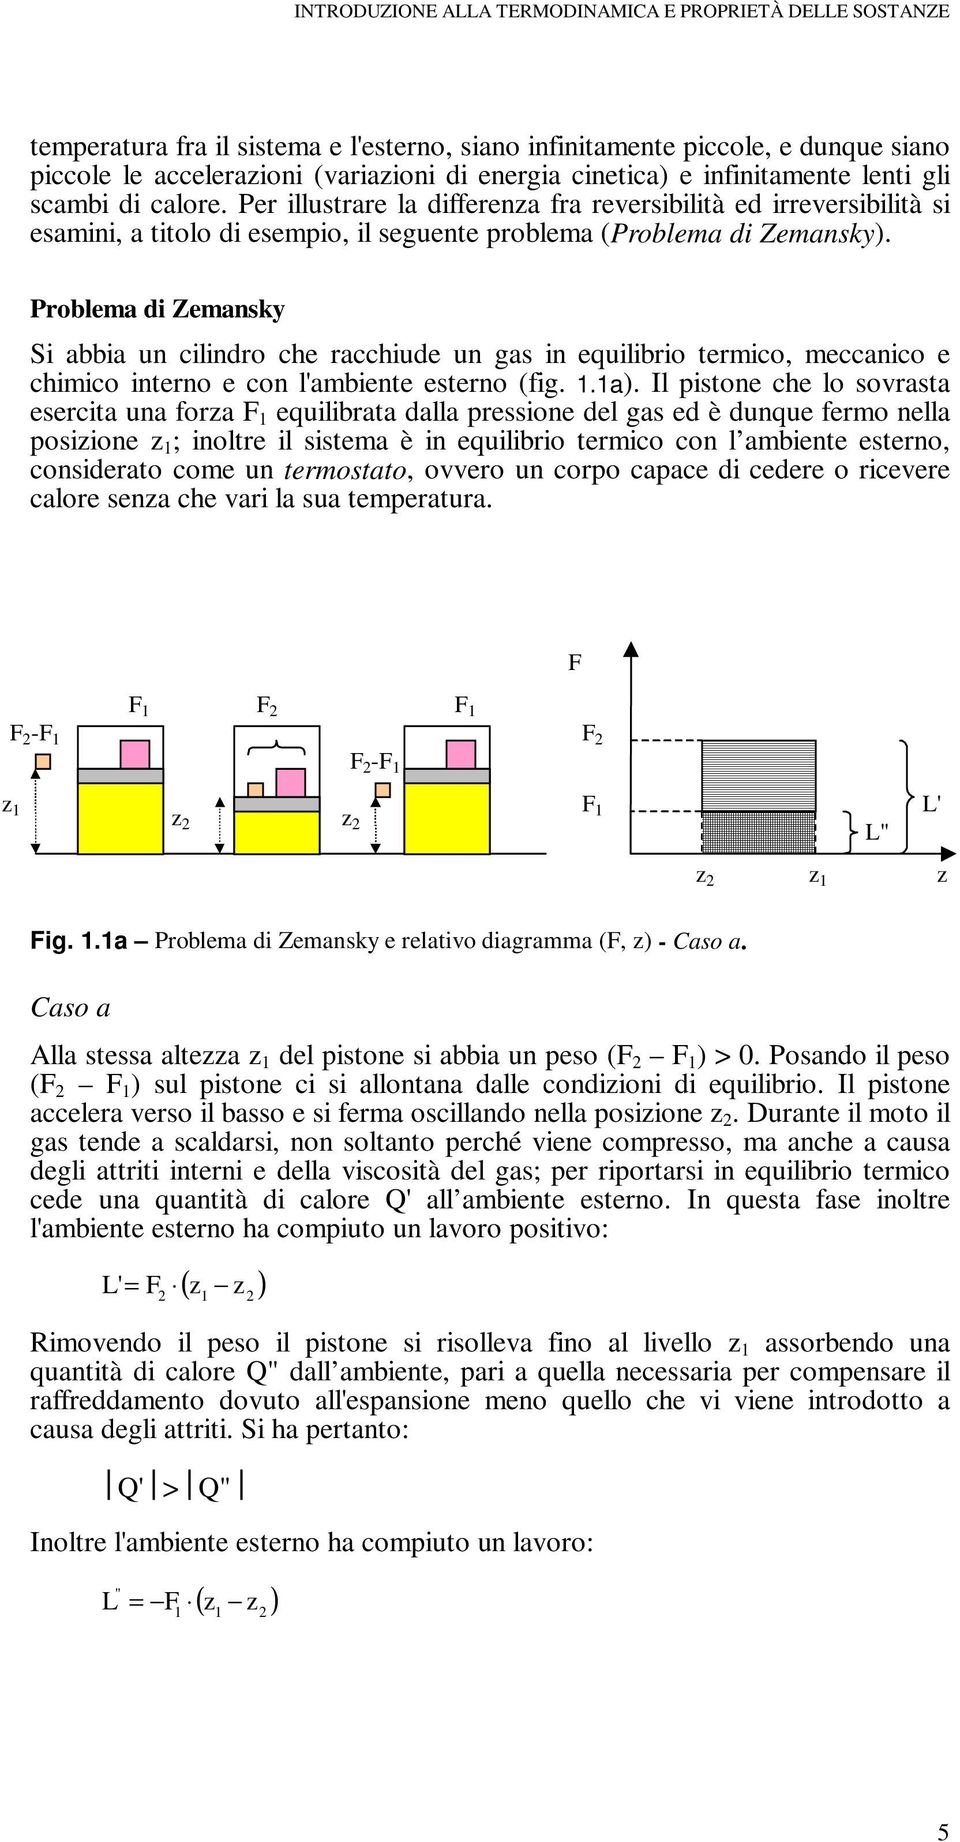 Problema d Zemansky S abba un clndro che racchude un gas n equlbro termco, meccanco e chmco nterno e con l'ambente esterno (fg..a).